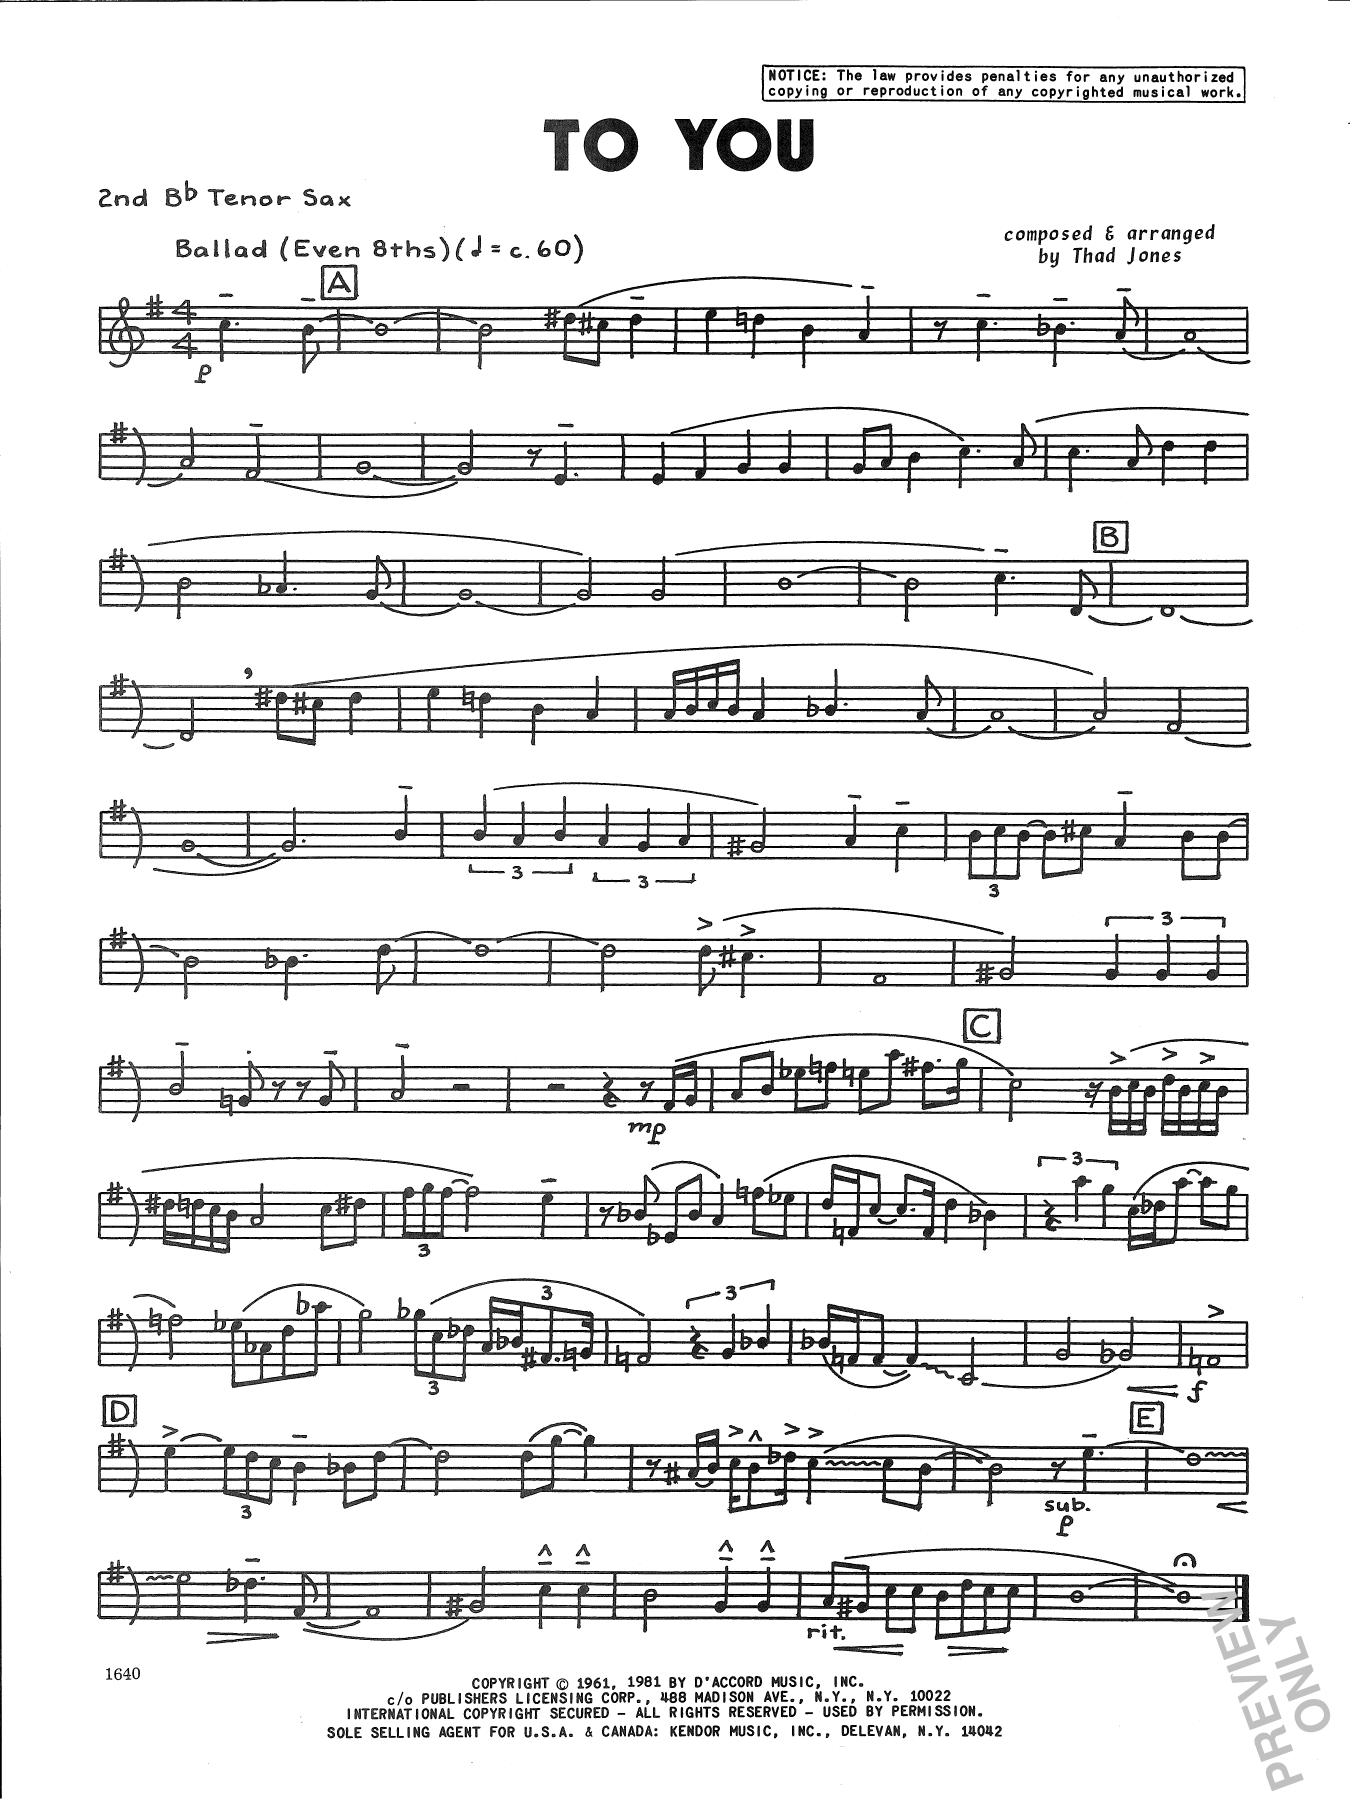 Download Thad Jones To You - 2nd Bb Tenor Saxophone Sheet Music